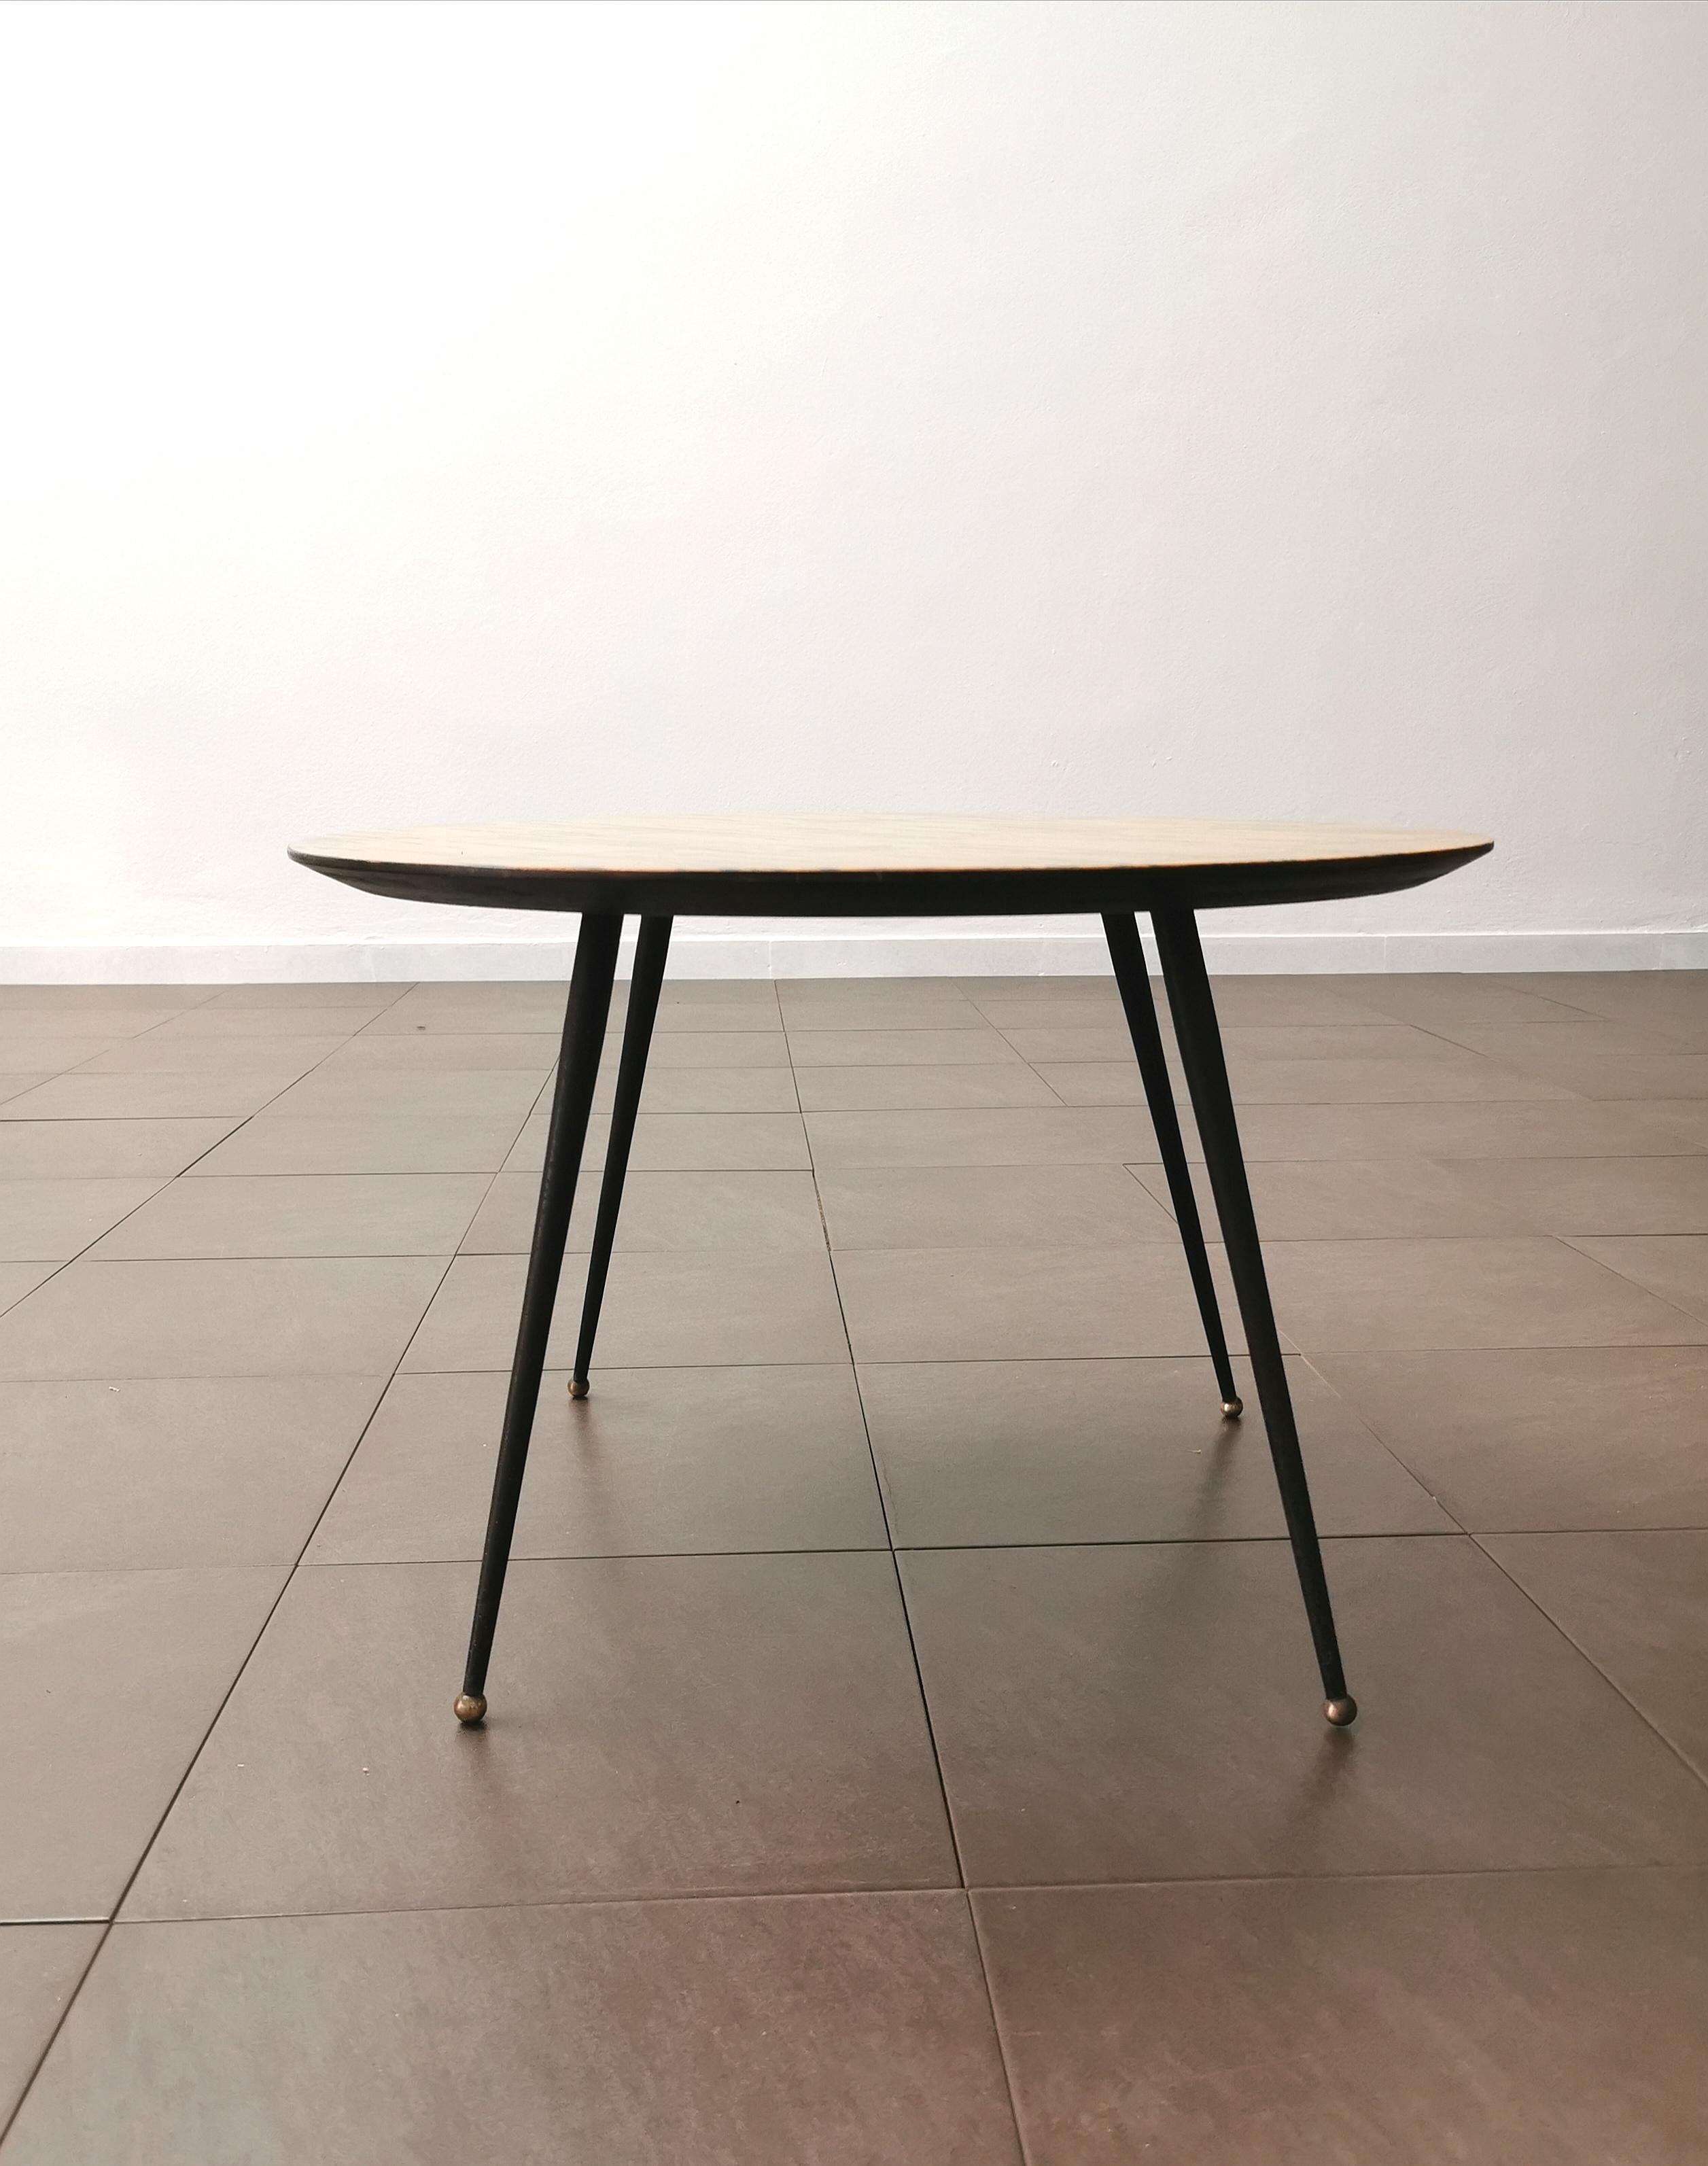 20th Century Coffee Table Wood Metal Brass Round Midcentury Modern Italian Design 1960s For Sale